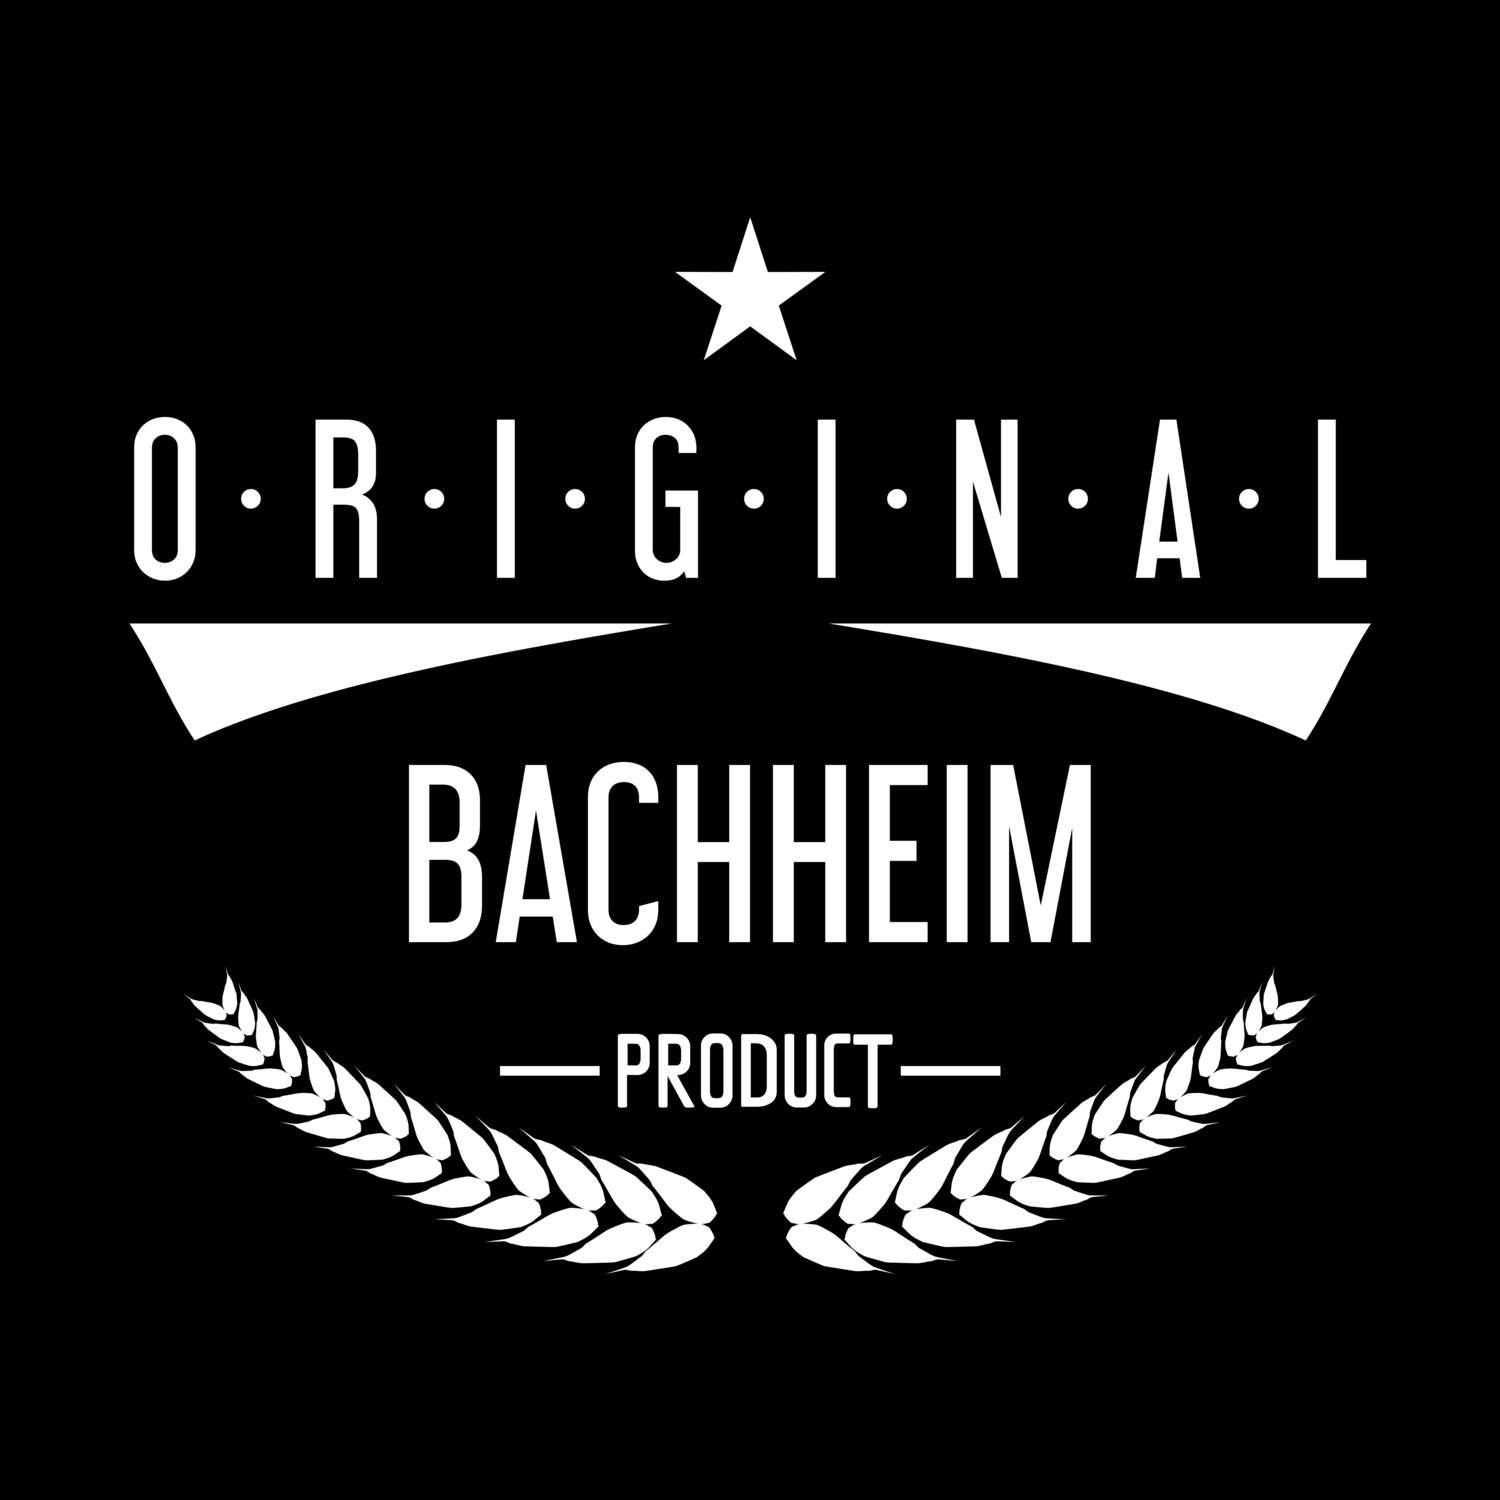 Bachheim T-Shirt »Original Product«